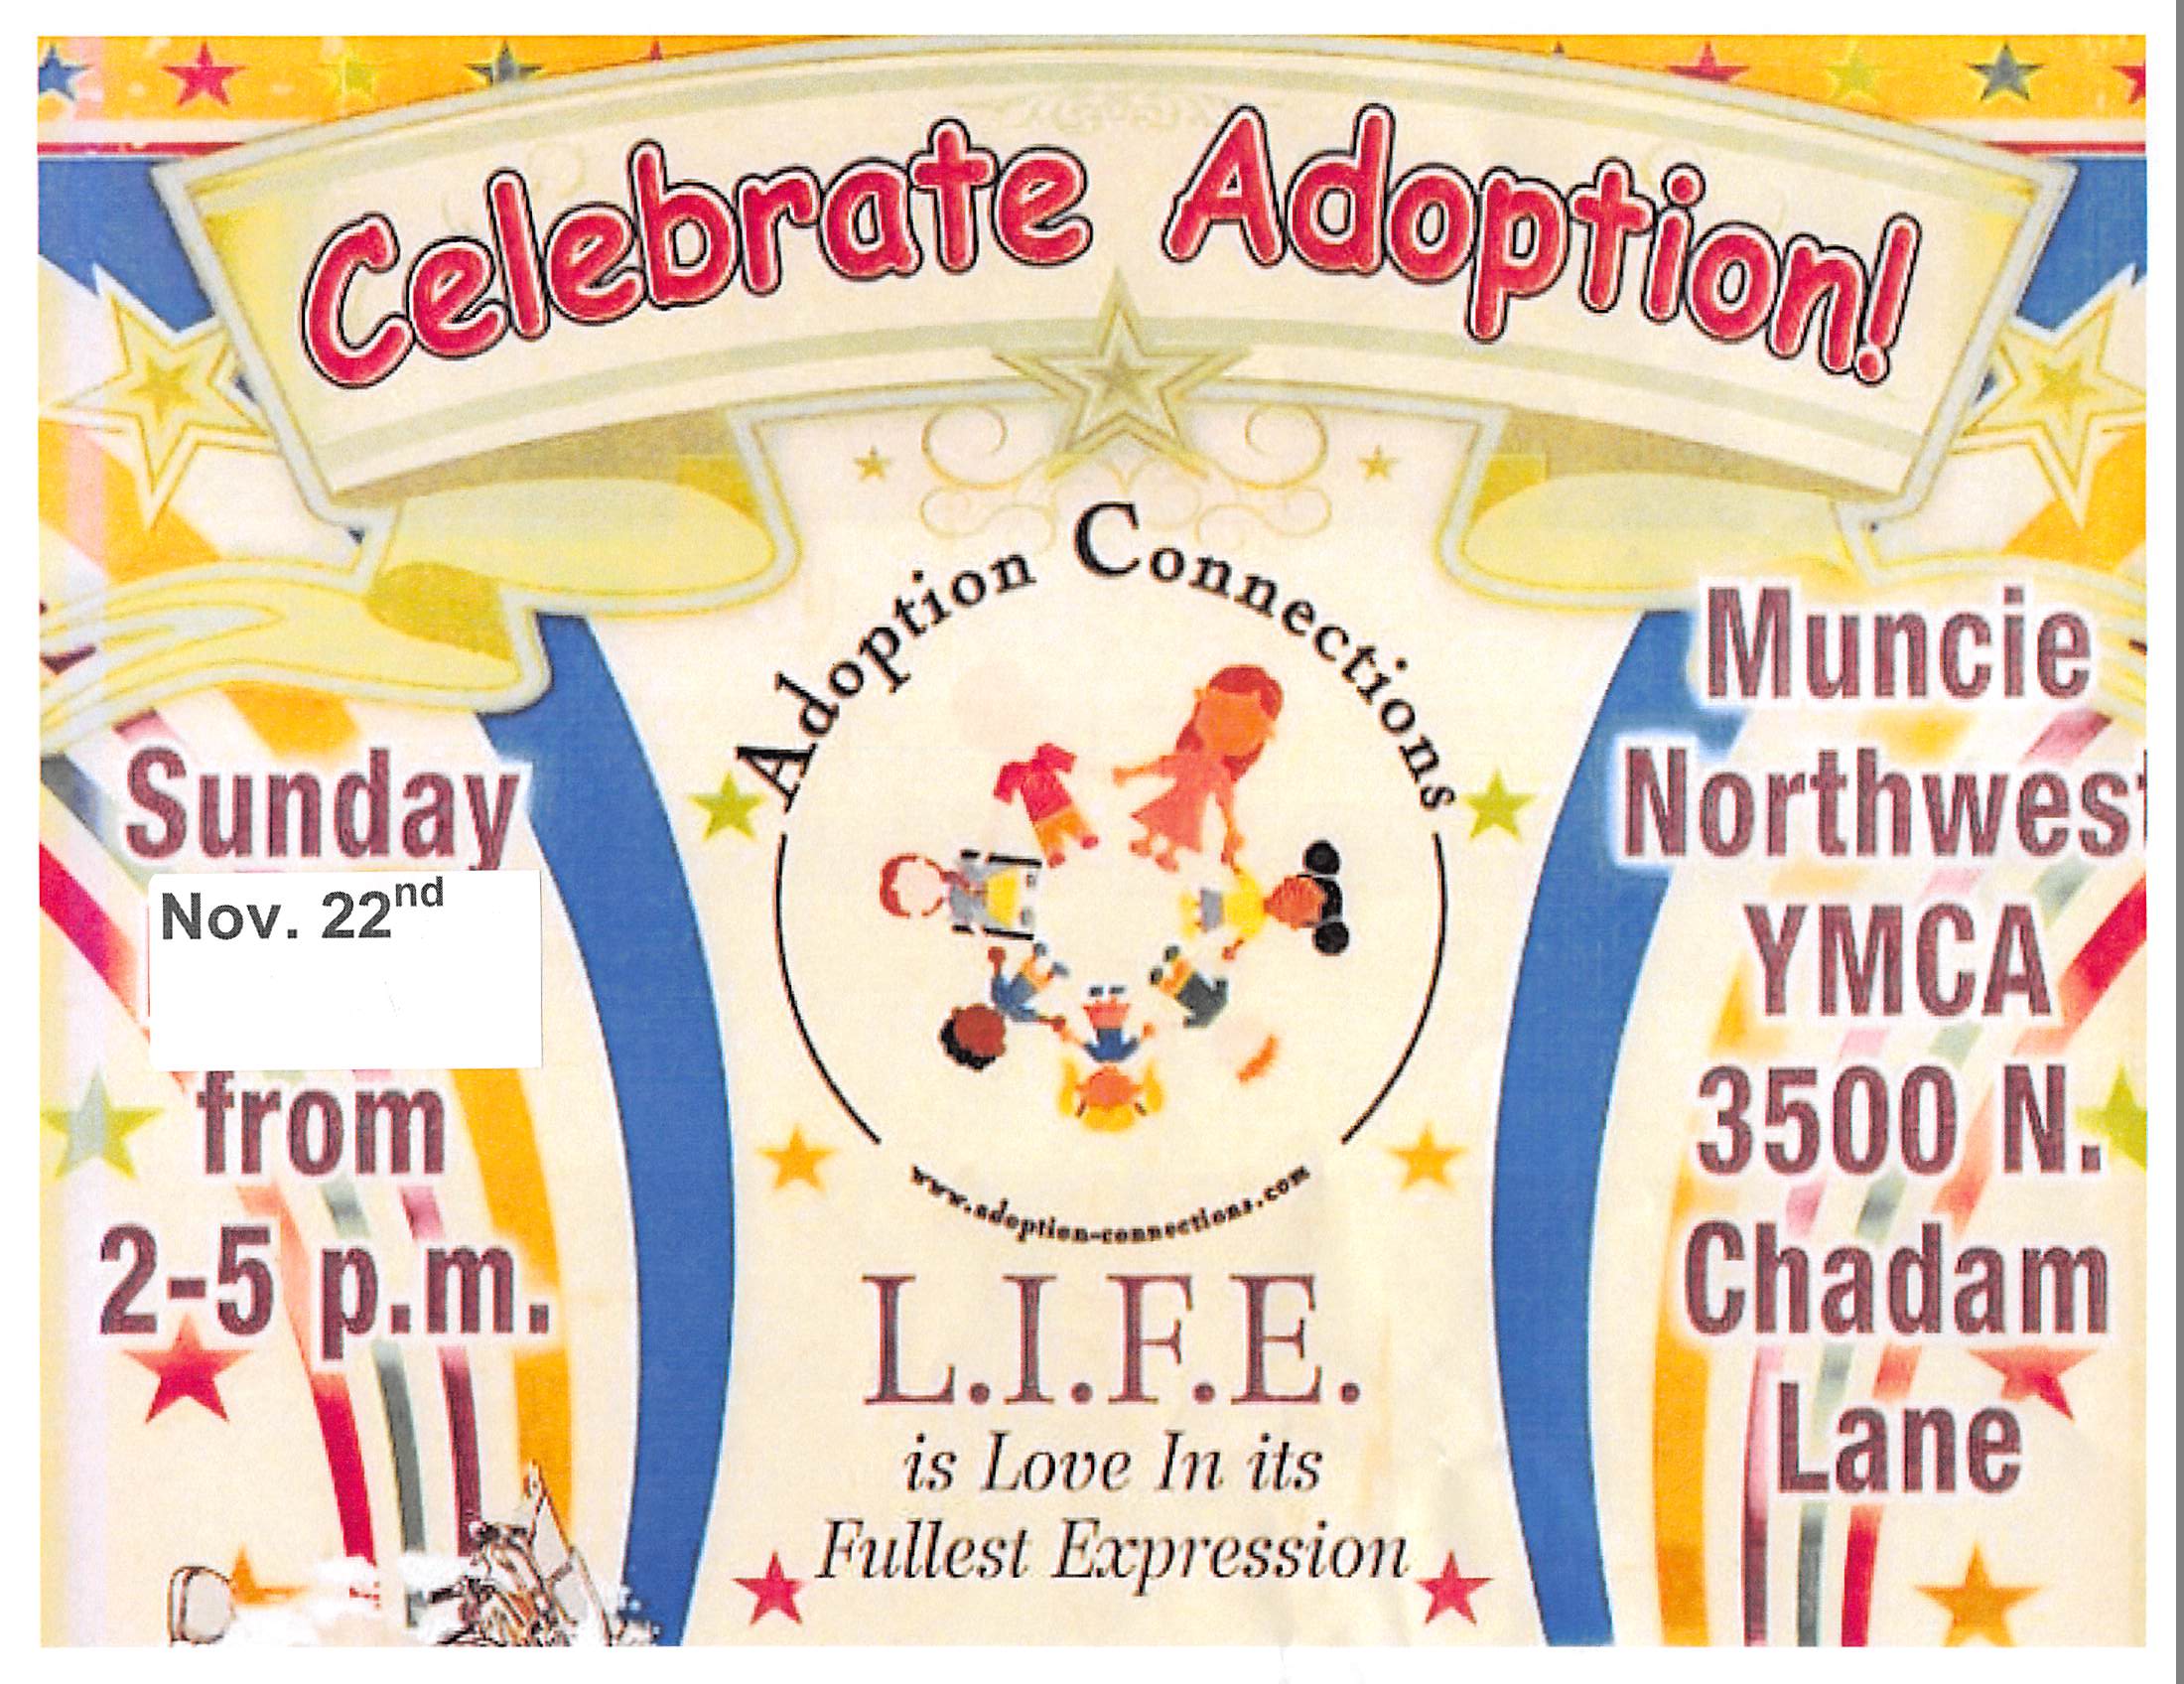 Annual “Celebrate Adoption!” Event